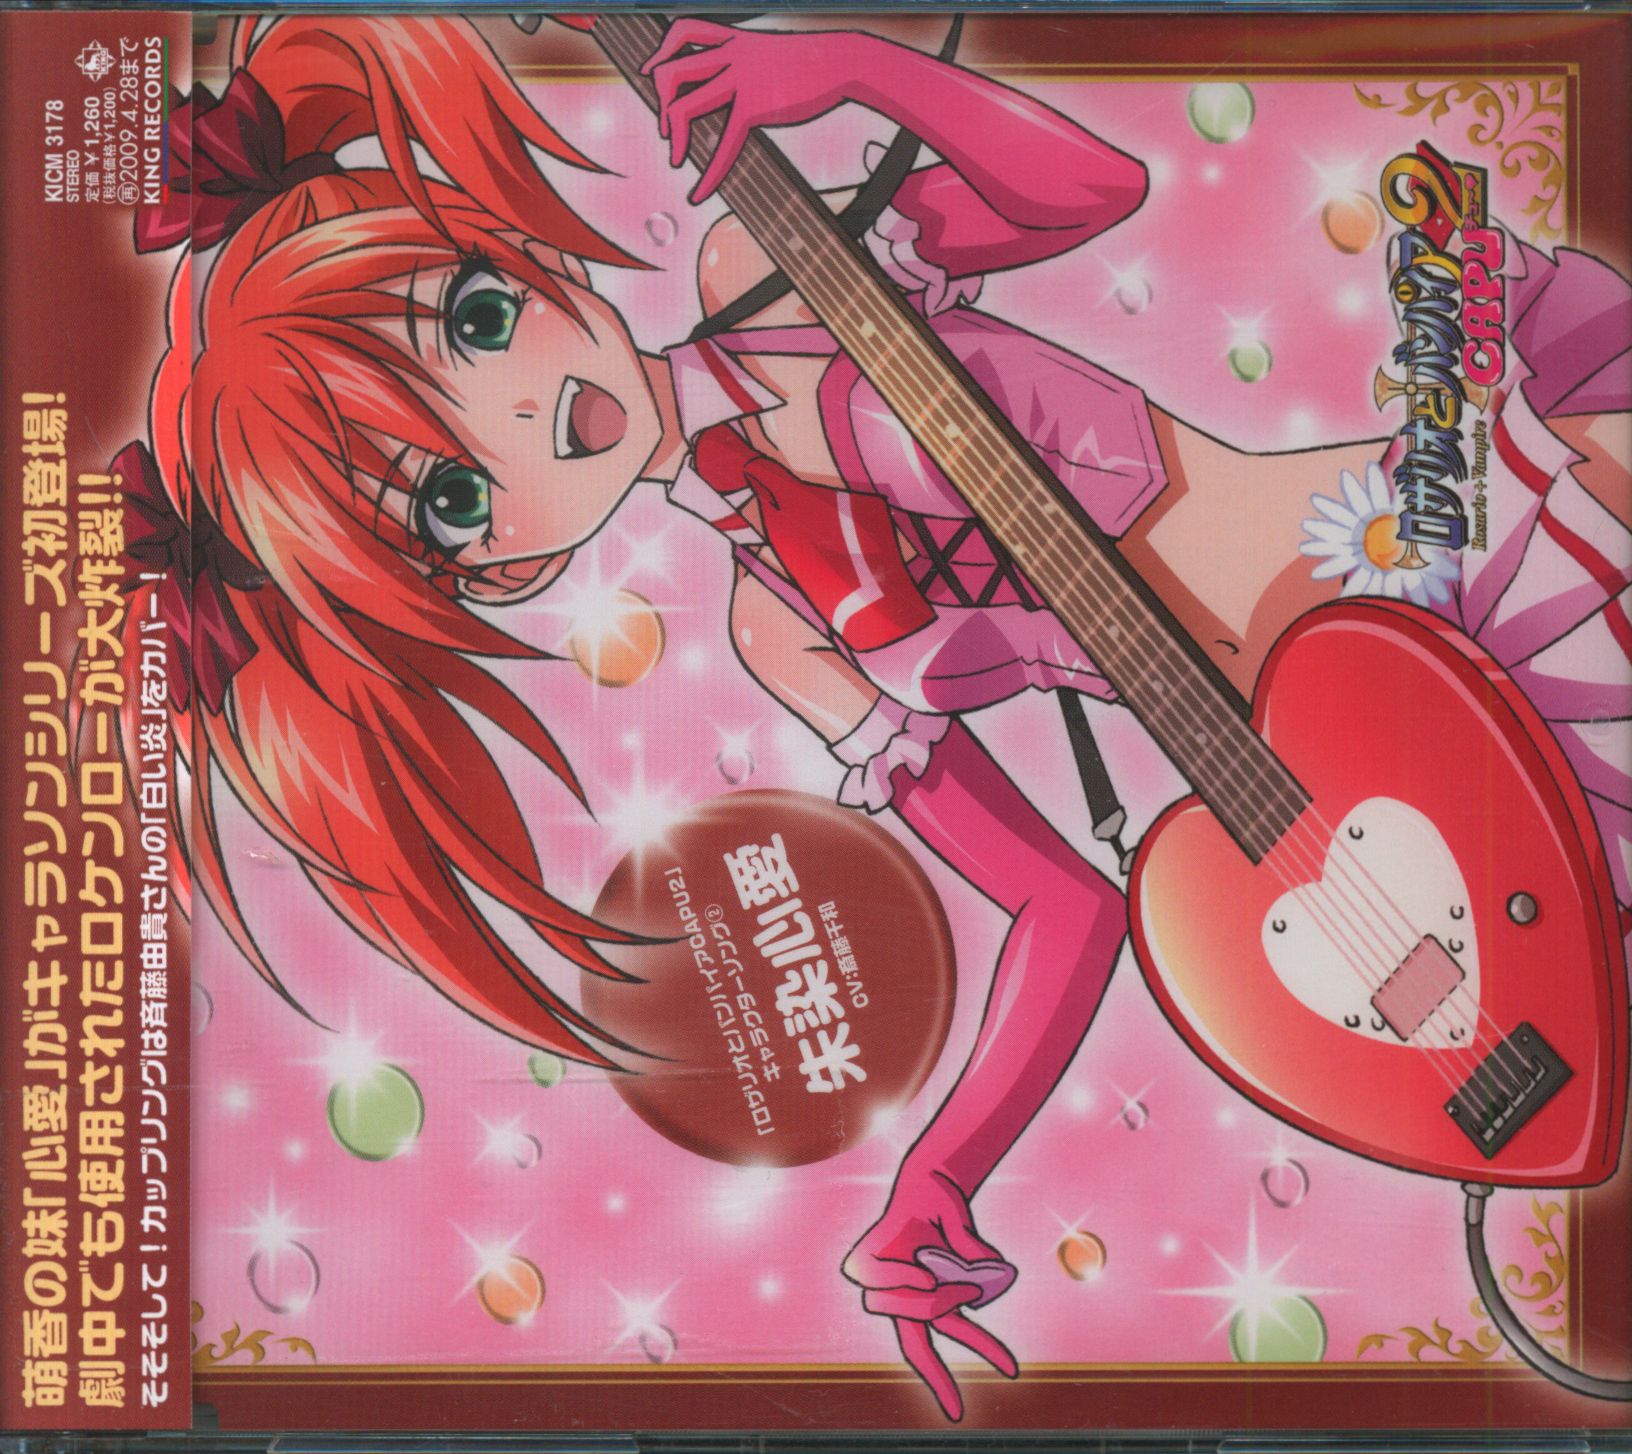 Anime Cd Rosario Vampire Capu2 Character Song 2 Shusomekokoroai Chiwa Saito Mandarake Online Shop